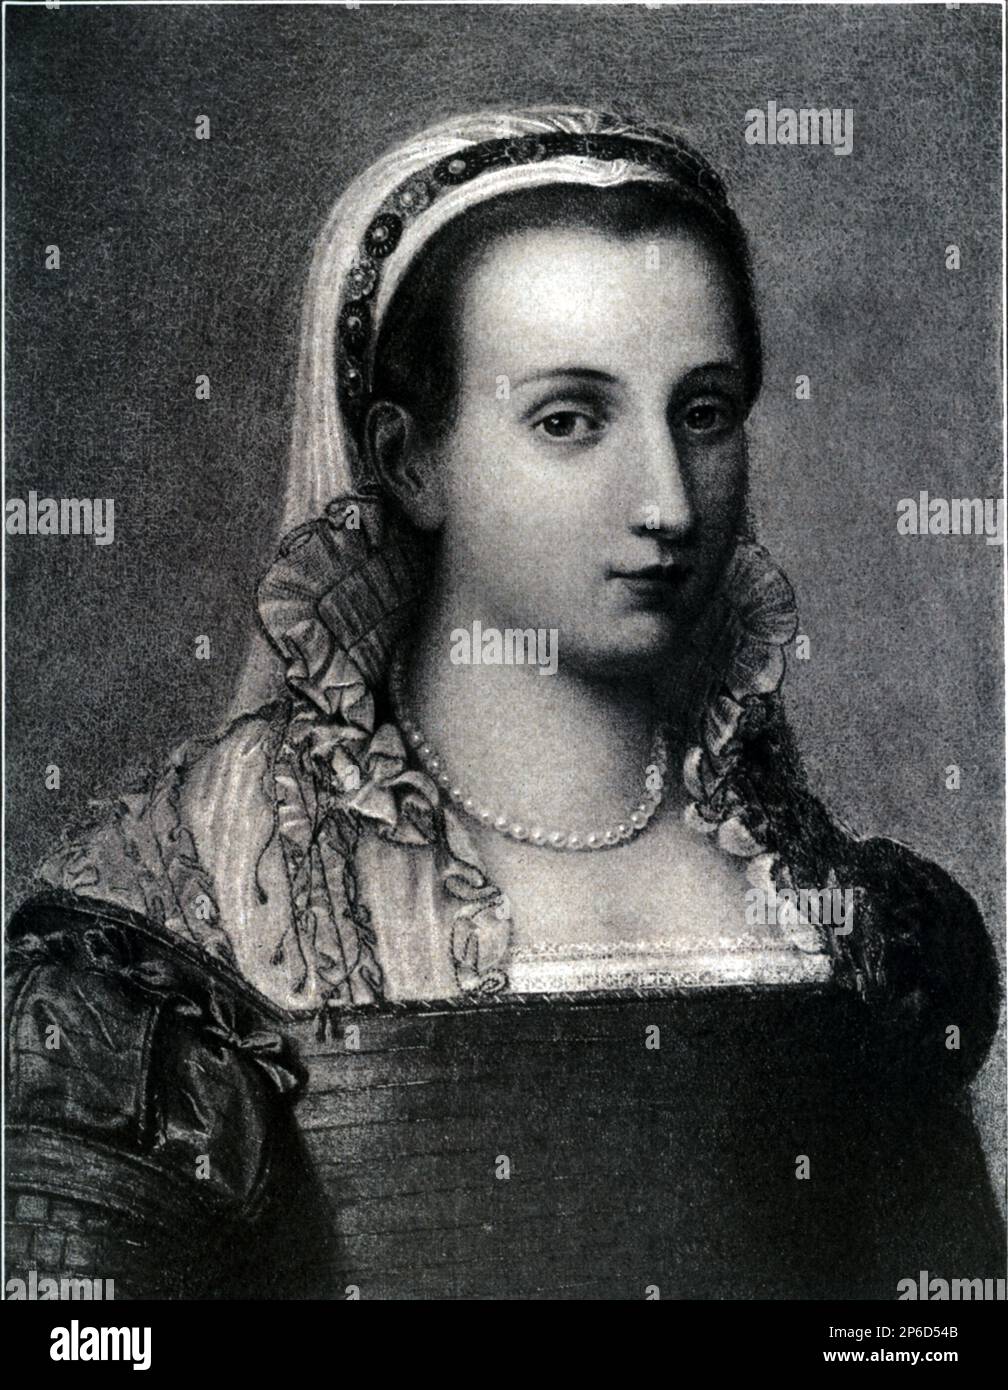 Die italienische Renaissance-Dichterin VITTORIA COLONNA ( 1490 - 1547 ) , Ehefrau von Fernando Francesco d'Avalos marchese di Pescara ( alias Ferrante , 1490 - 1525 ), enger Freund von Michelangelo Buonarroti ( Bonarroti ). Porträt aus der Colonna-Familiengalerie .- d' Avalos - RINASCIMENTO - LETTERATURA - Literatur - POETA - POETESSA - POESIE - colletto - Kragen - pizzo - Spitze - perle collana - perla - Perlmutt - Perlmutt - foto Storiche - foto Storica - Portrait - Rituto - Nobiltà italiana - nobility - nobili italiani - nobile - RINASCIMENTO - RENAISSANCE - ITALIEN - ITALIA - Schmuck - Stockfoto